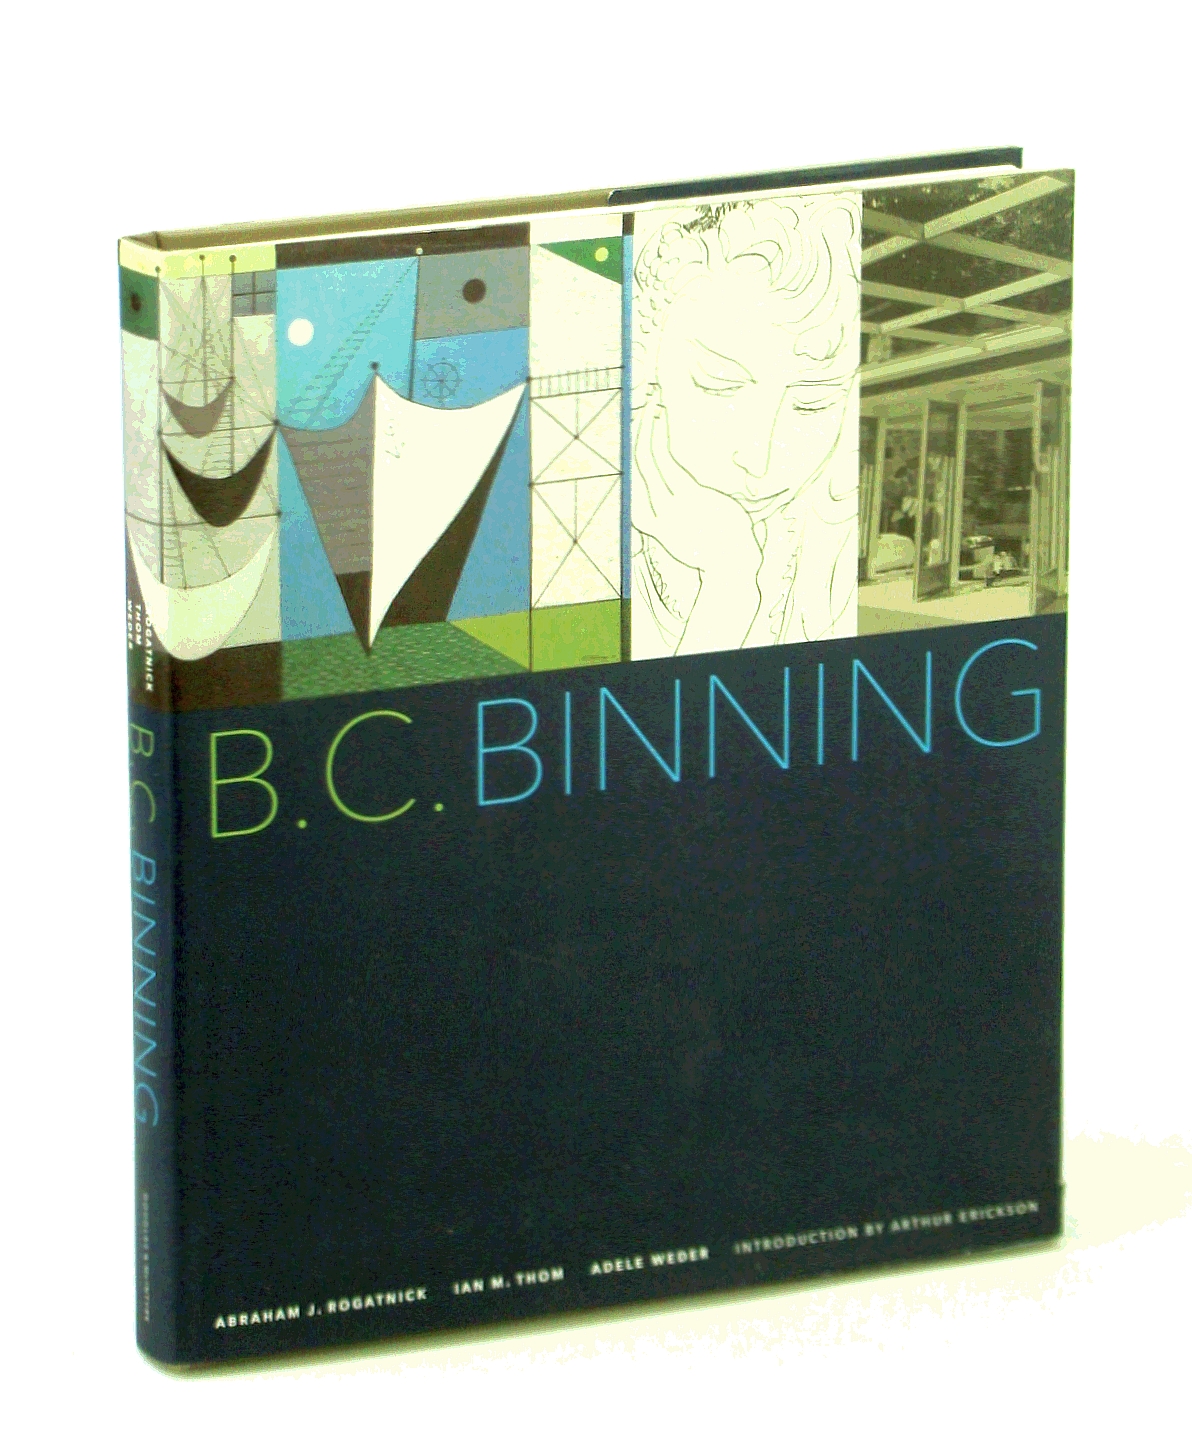 B.C. Binning - Abraham J. Rogatnick; Ian M. Thom; Adele Weder; Arthur Erickson [Introduction]